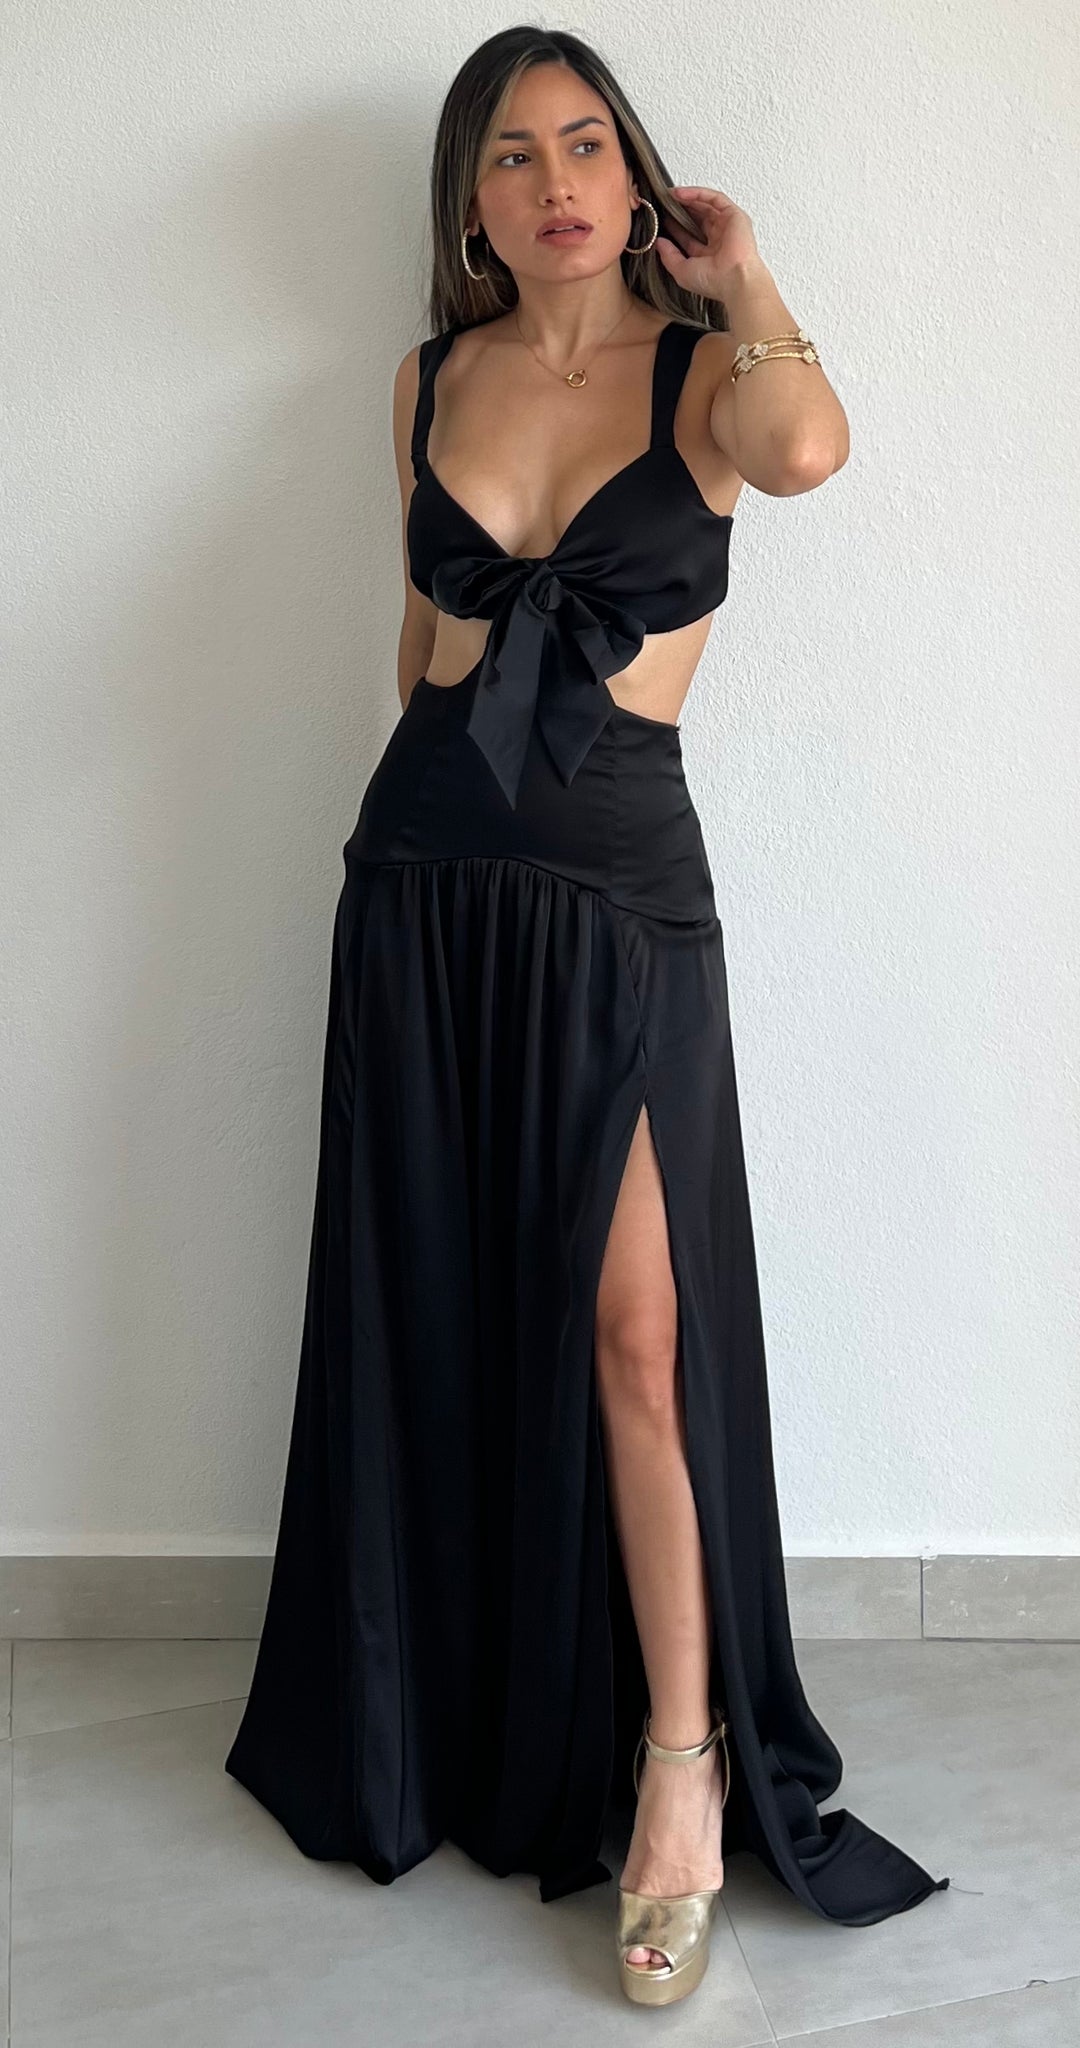 Work of Art Black Satin Maxi Dress